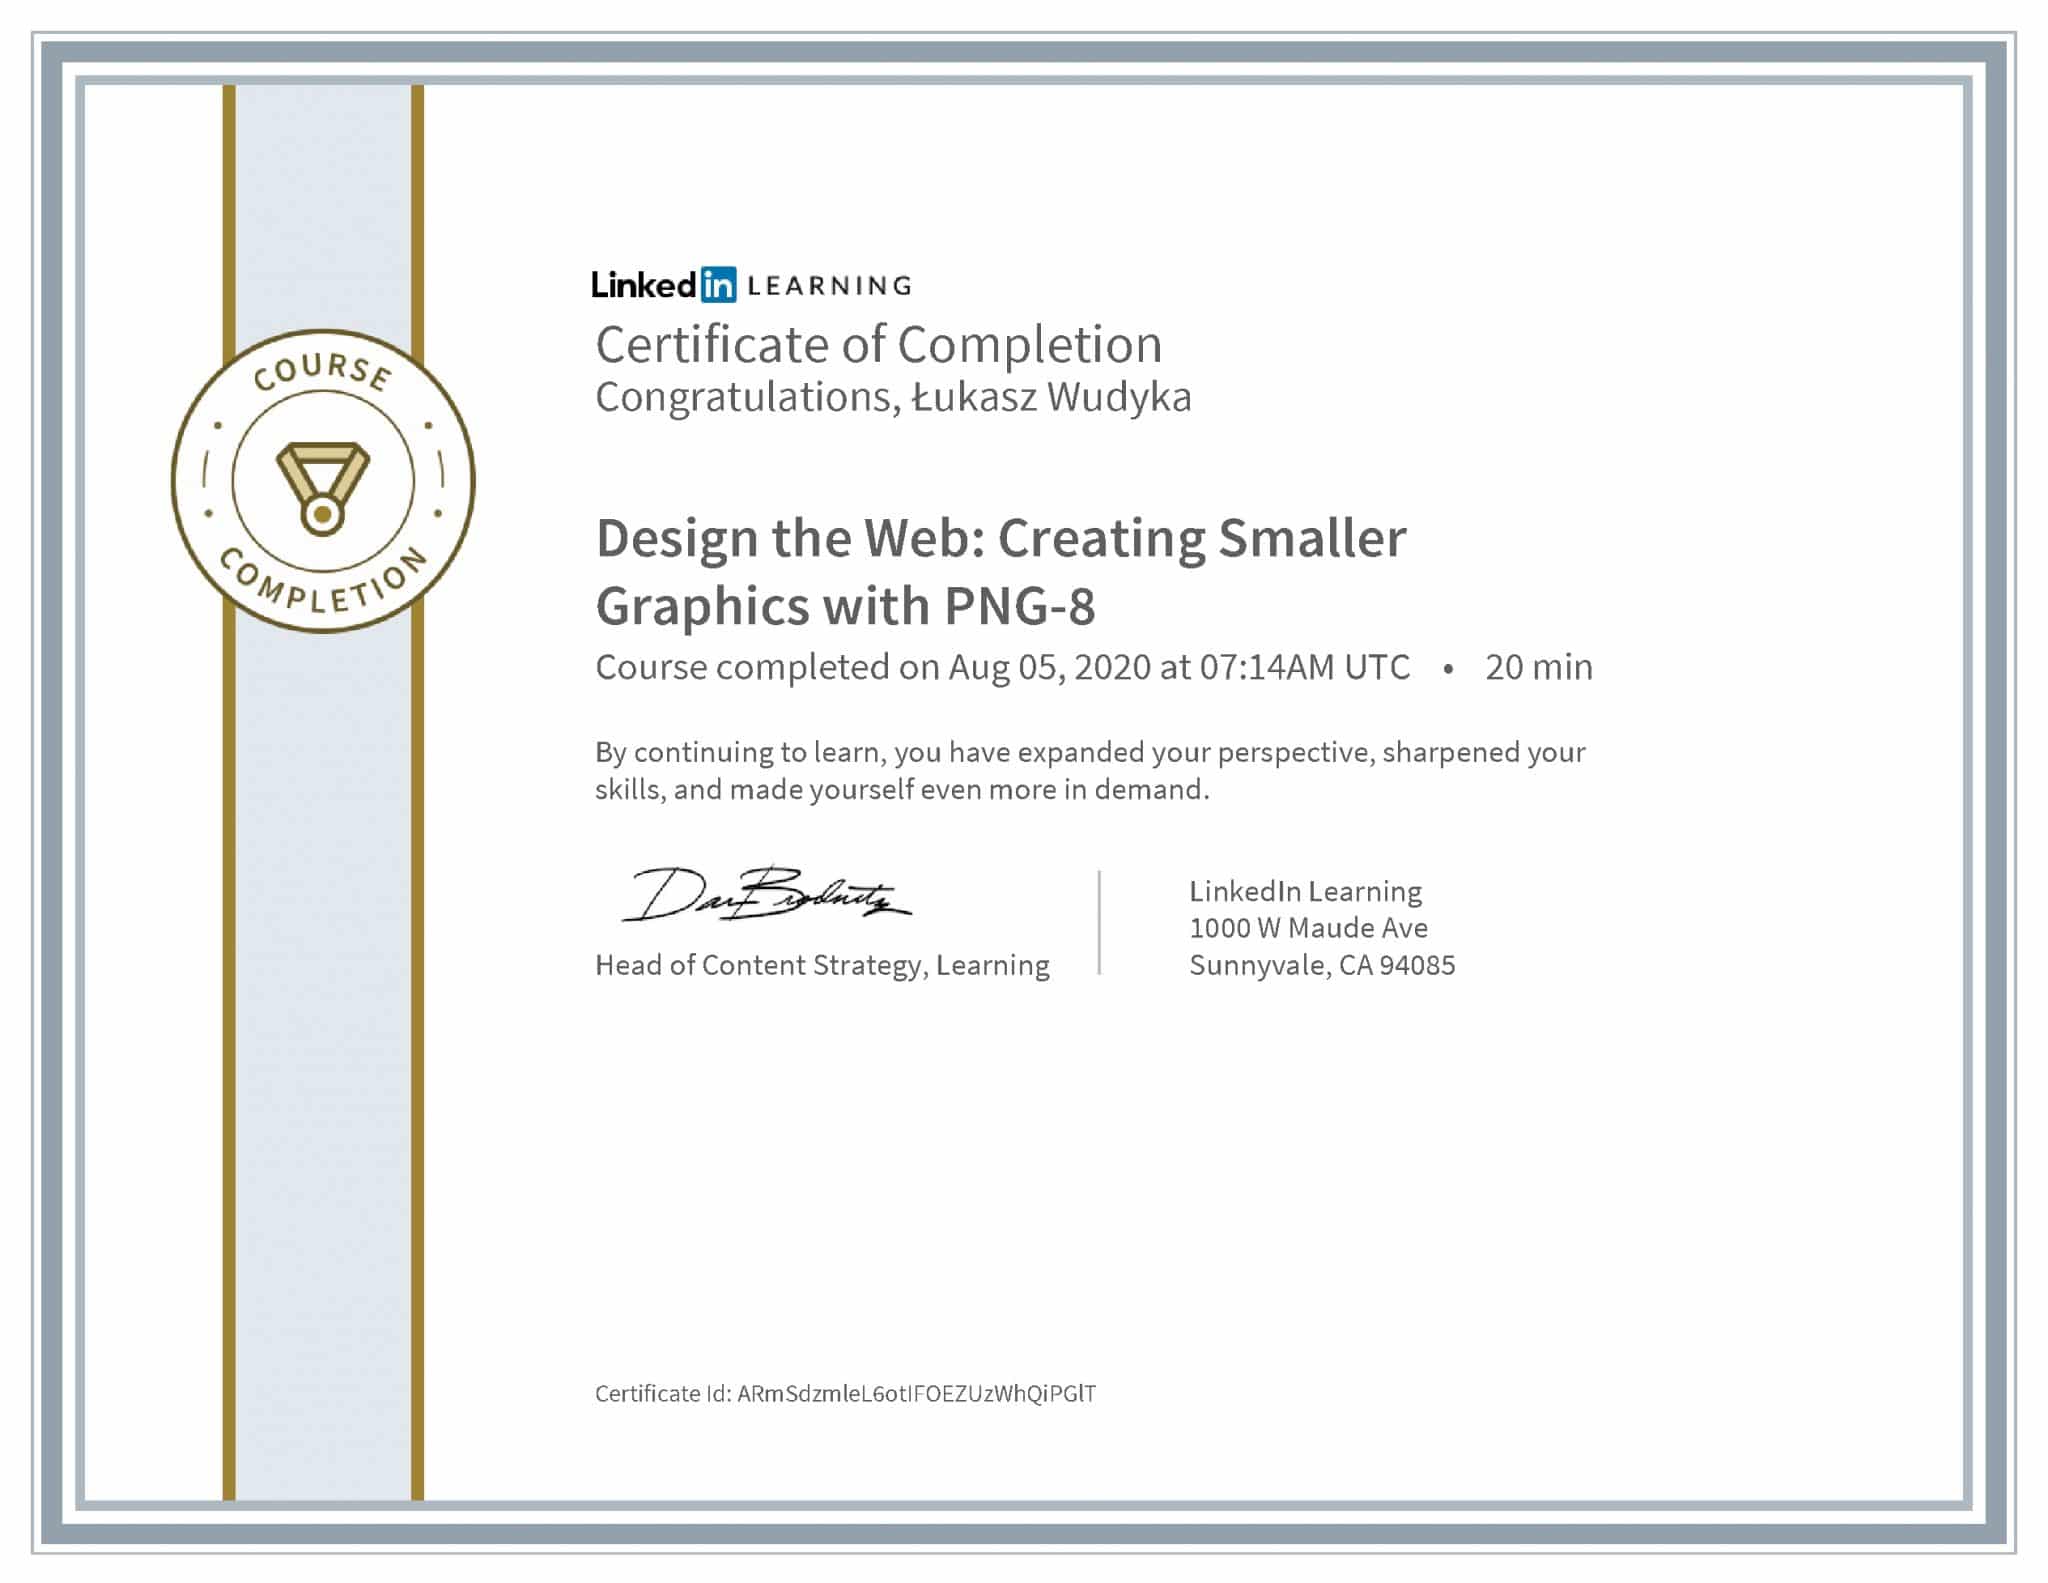 Łukasz Wudyka certyfikat LinkedIn Design the Web: Creating Smaller Graphics with PNG-8